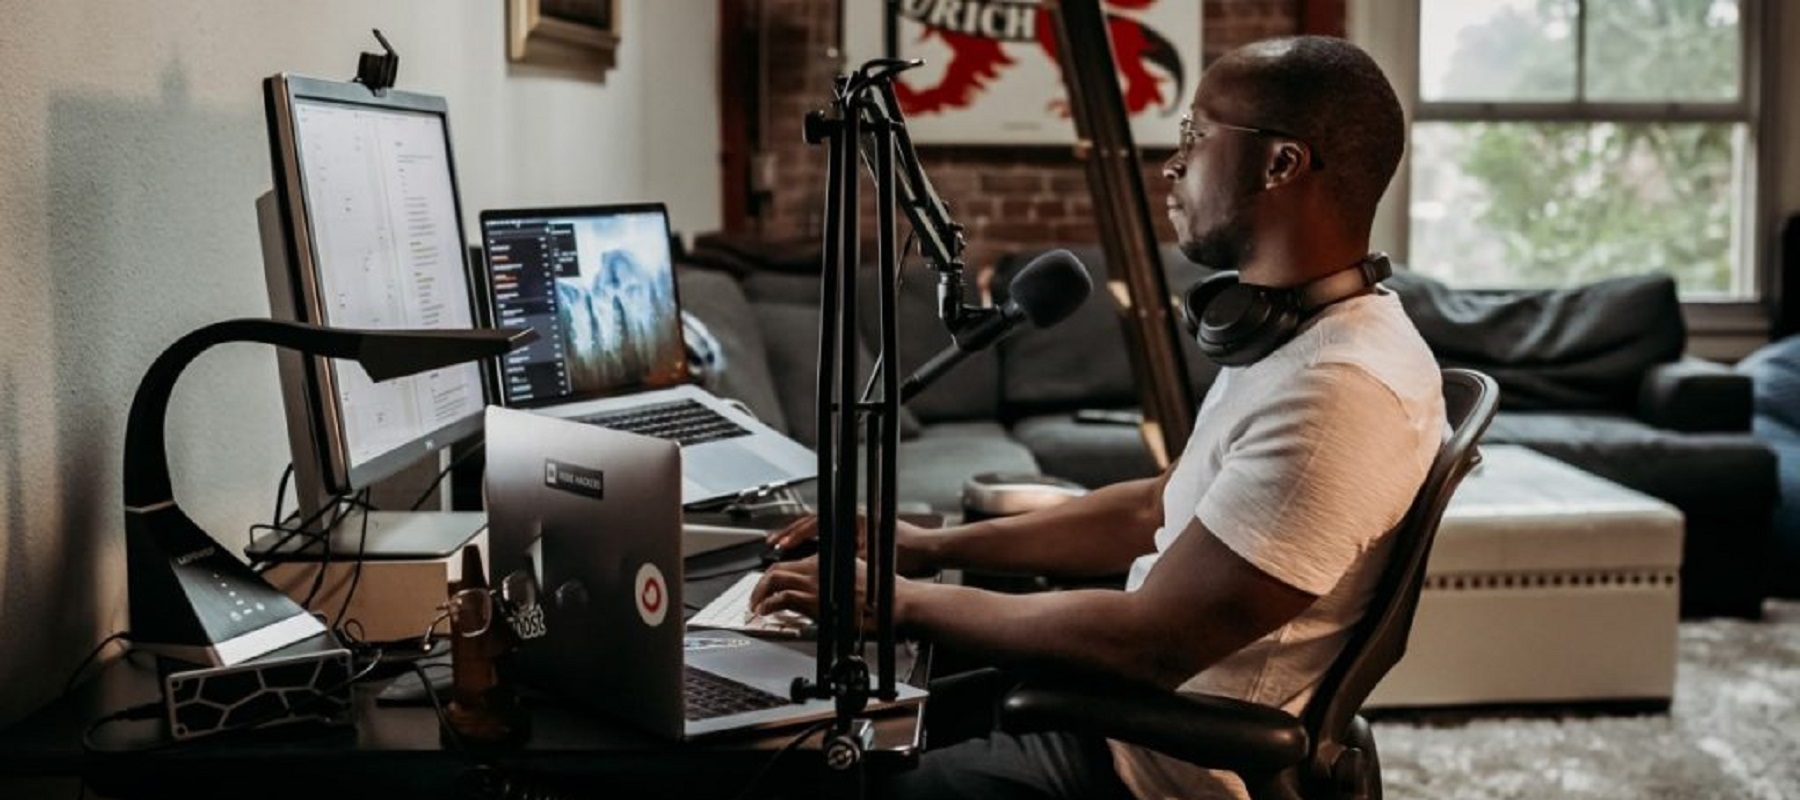 Podcast incubation studio SemaBOX launches podcast distribution platform